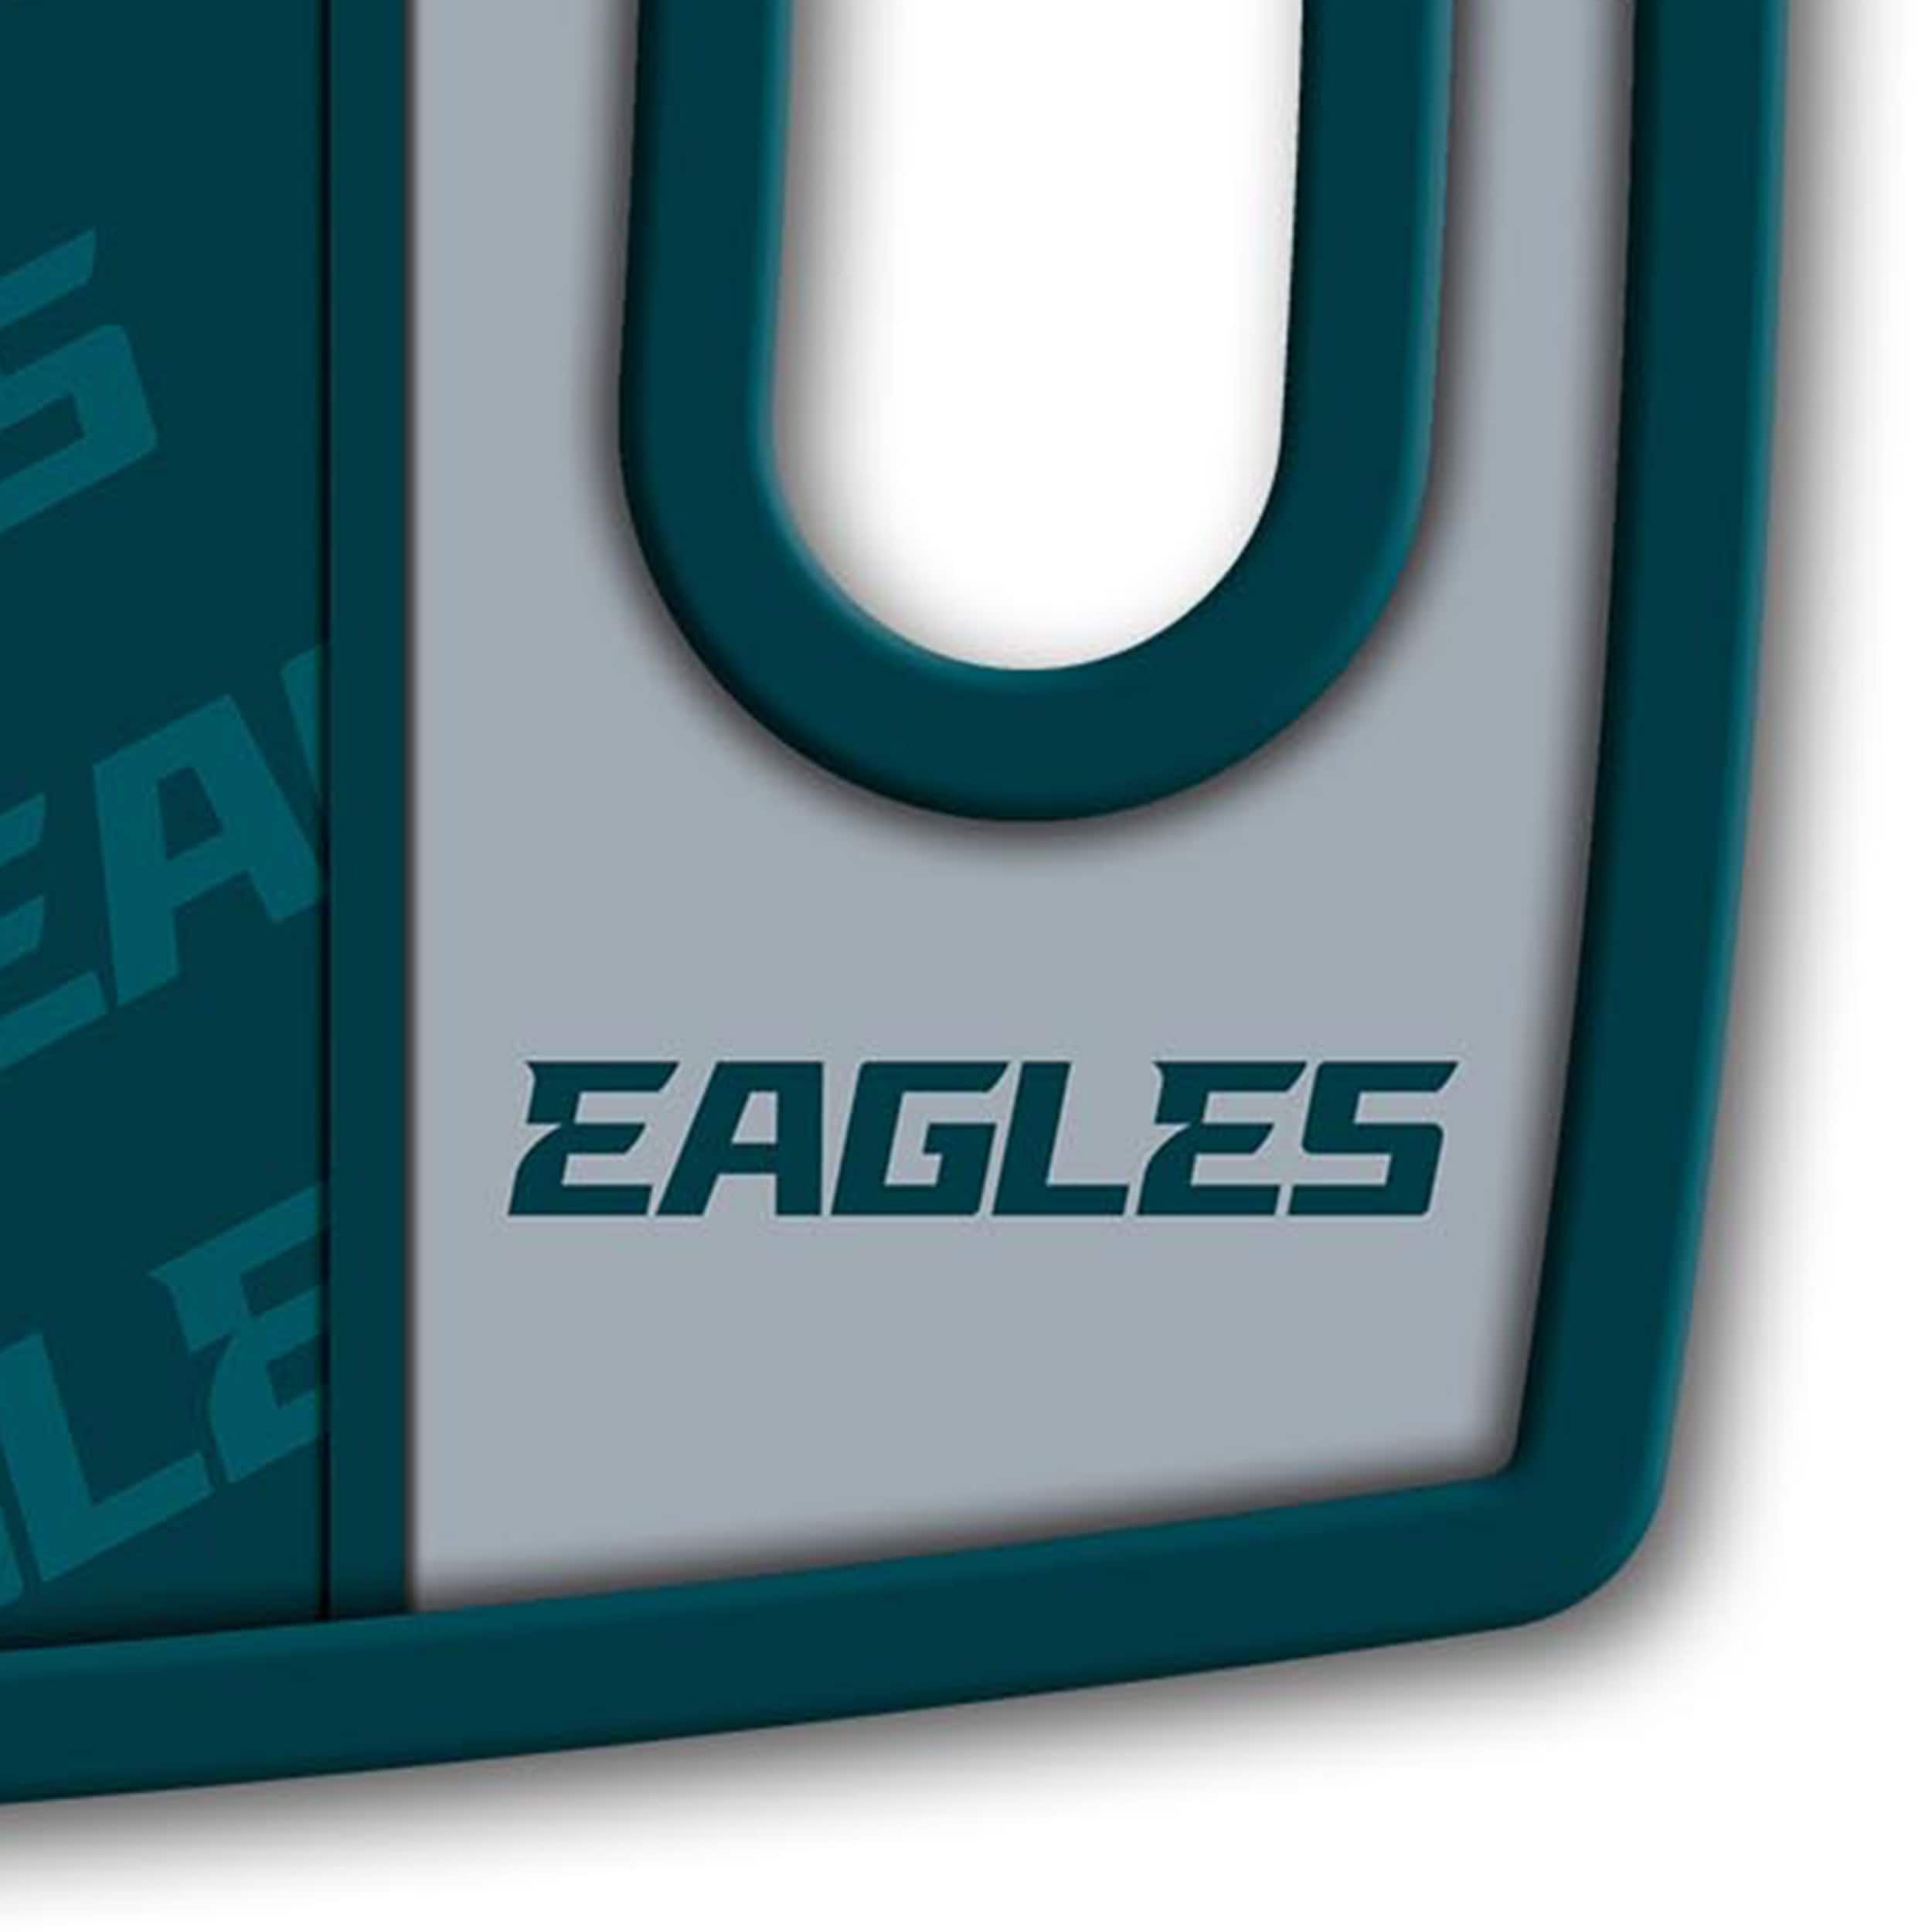 Nfl Philadelphia Eagles Logo Series Cutting Board : Target